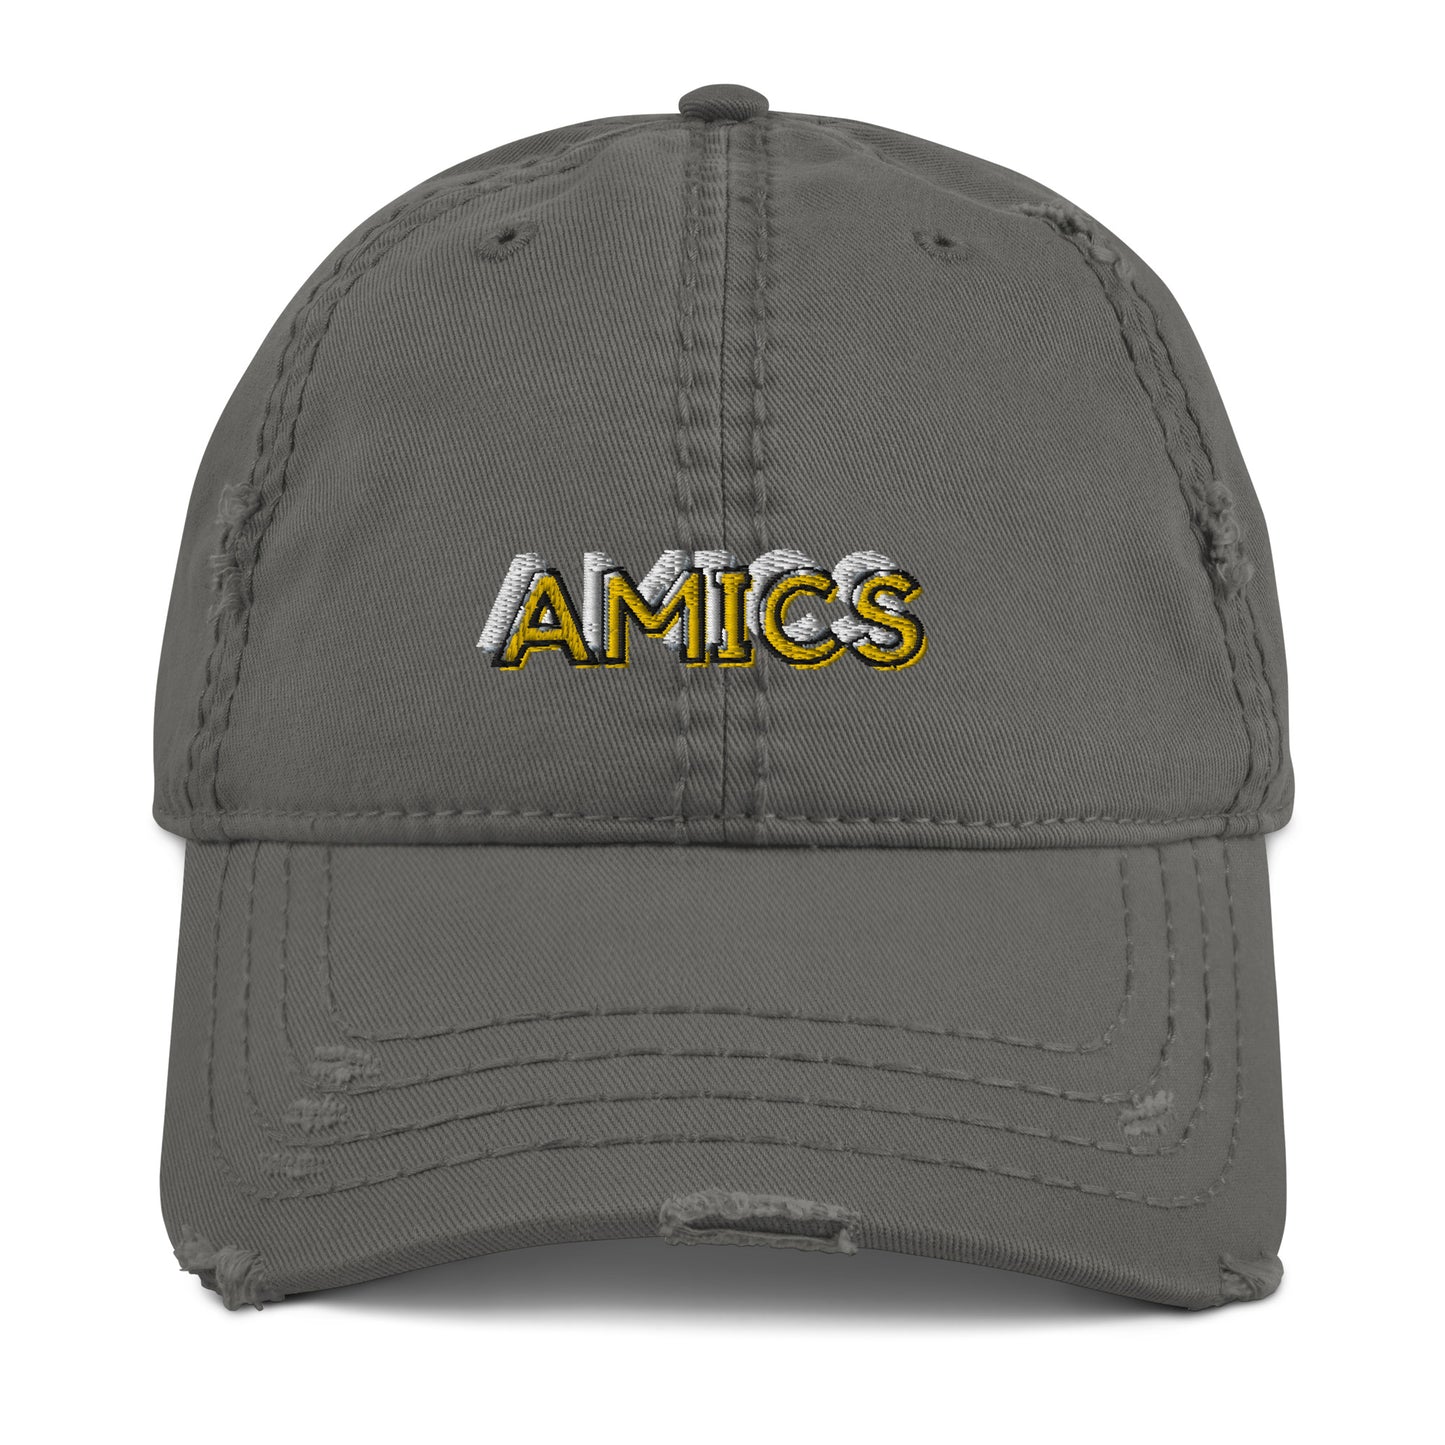 AMICS Distressed Hat